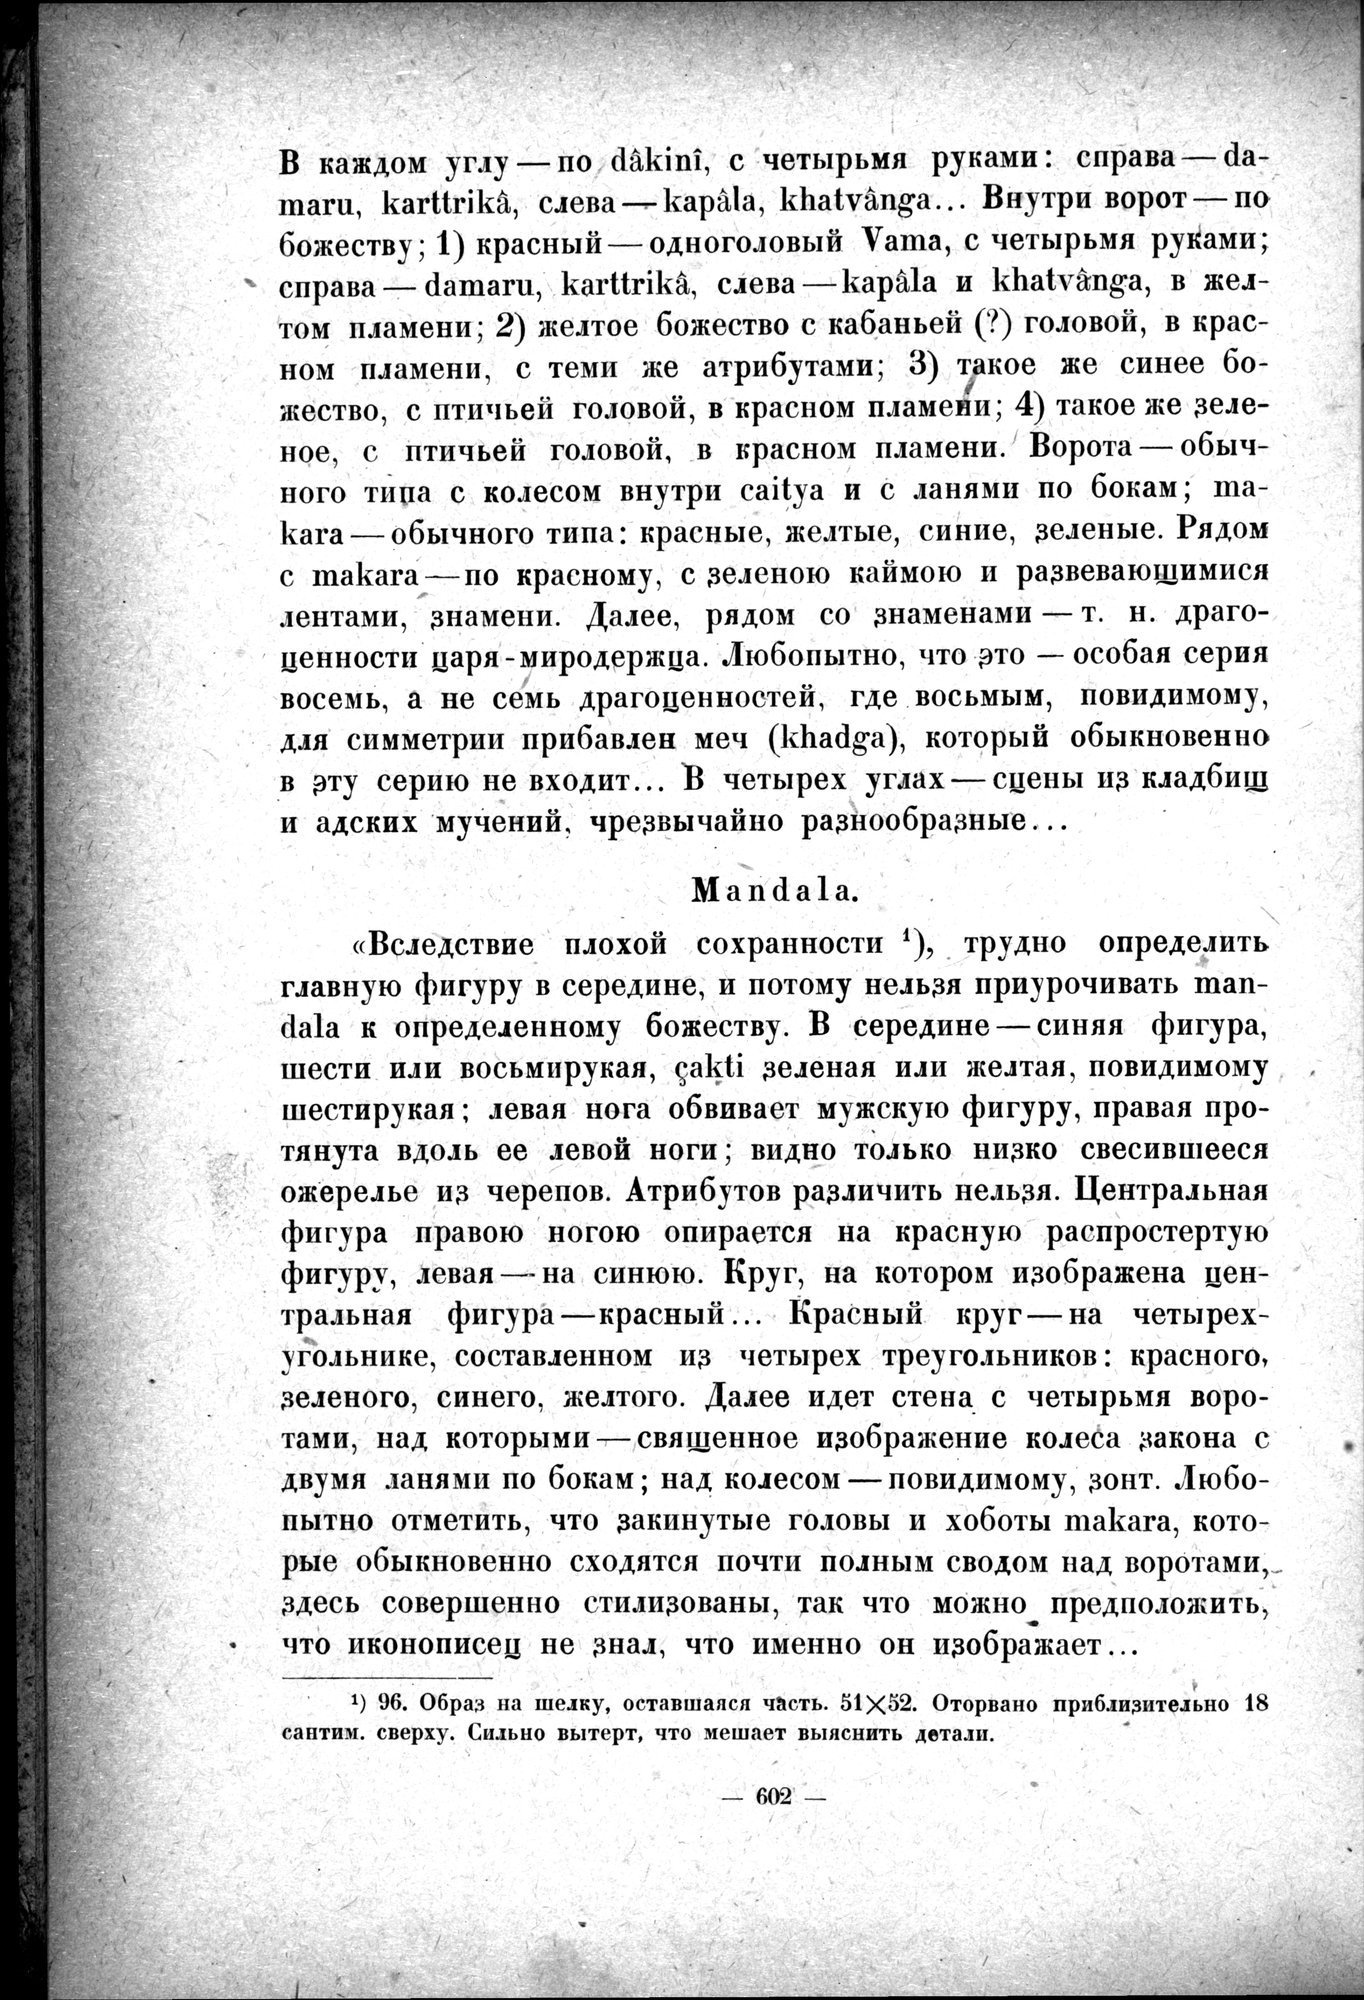 Mongoliya i Amdo i mertby gorod Khara-Khoto : vol.1 / Page 688 (Grayscale High Resolution Image)